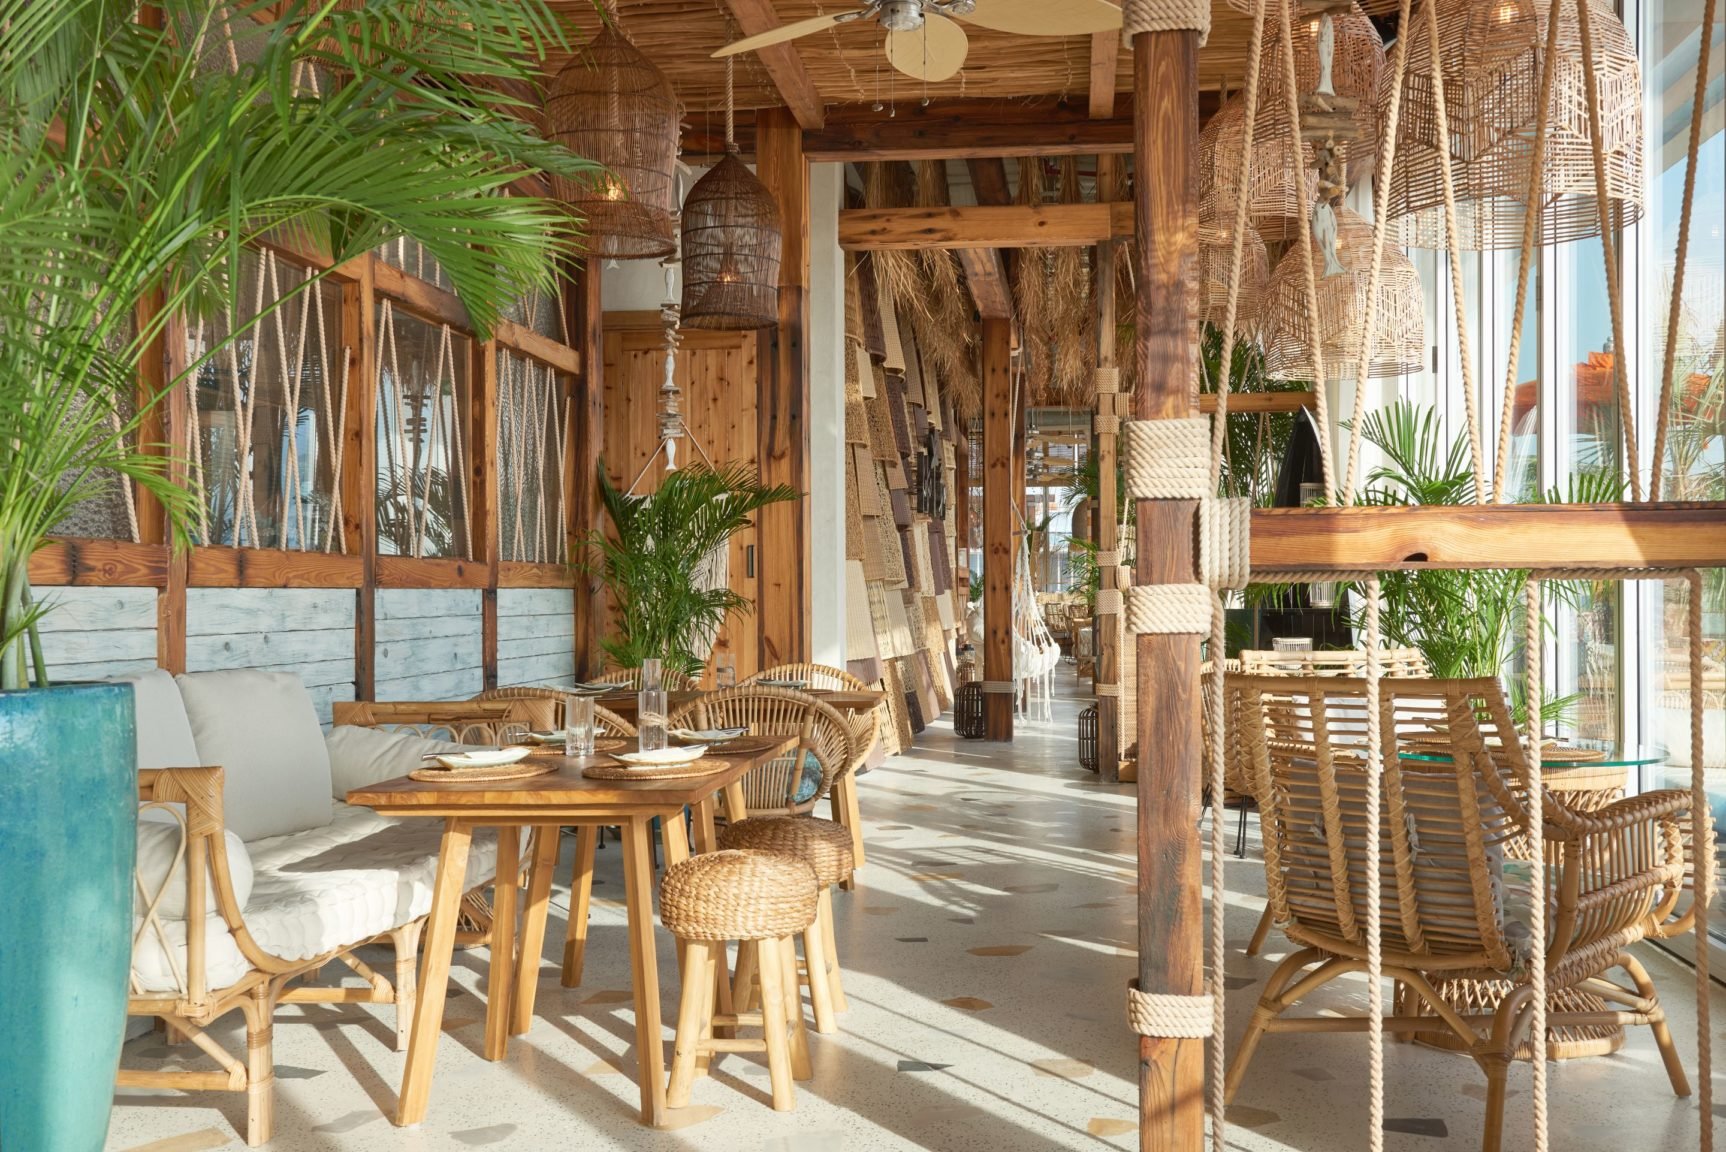 Koko Bay Restaurant, Dubai - Lounge, Restaurant Interior Design on Love ...